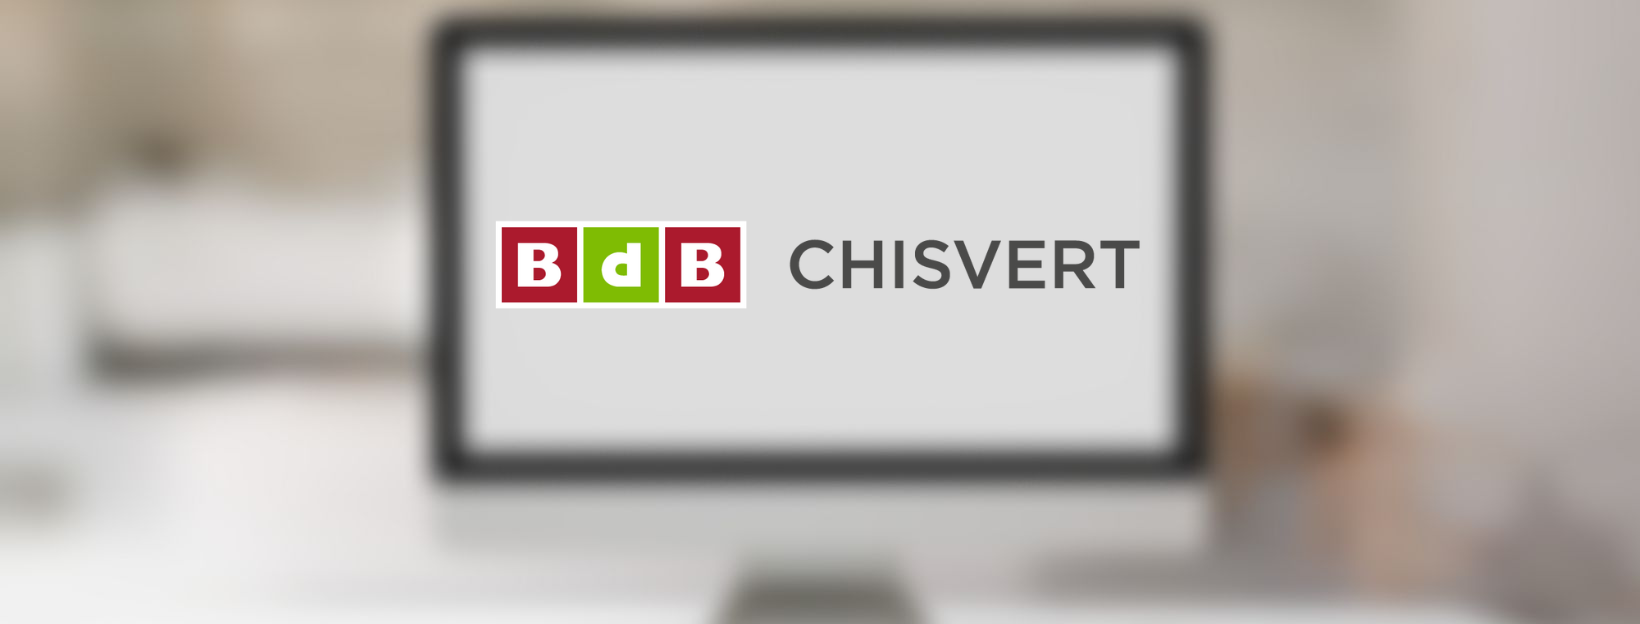 Pagina web de Chisvert